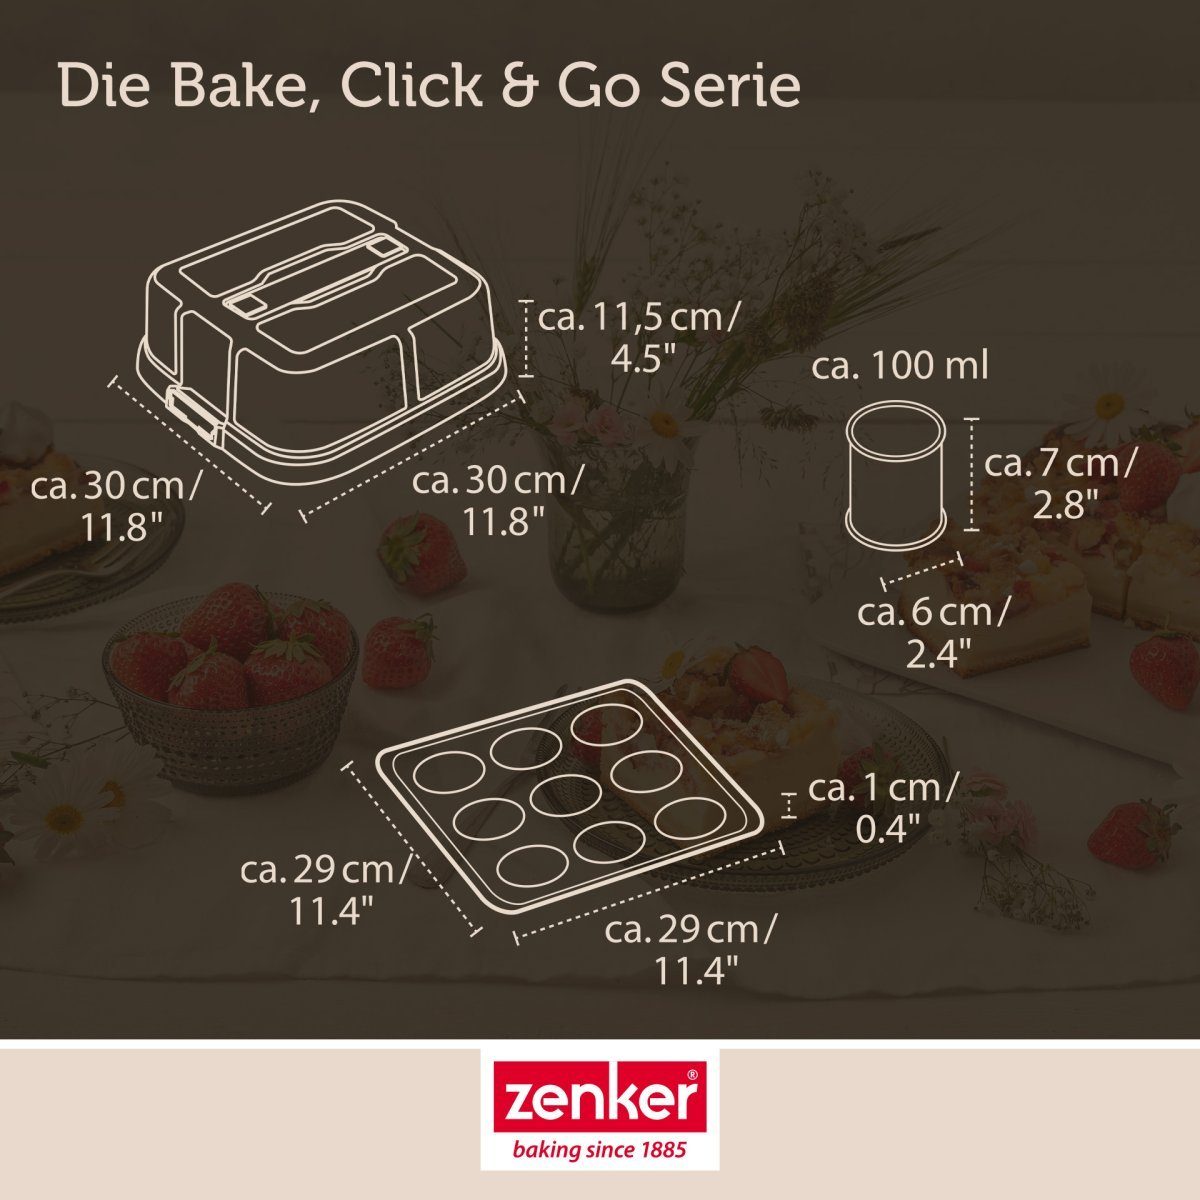 Go Backblech Click Zenker Bake, &